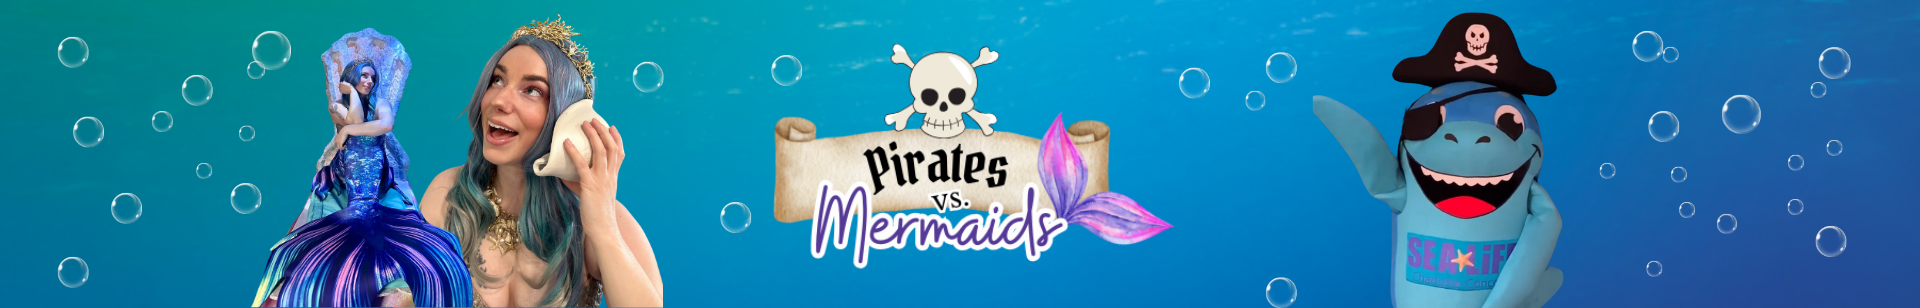 Pirates Vs Mermaids